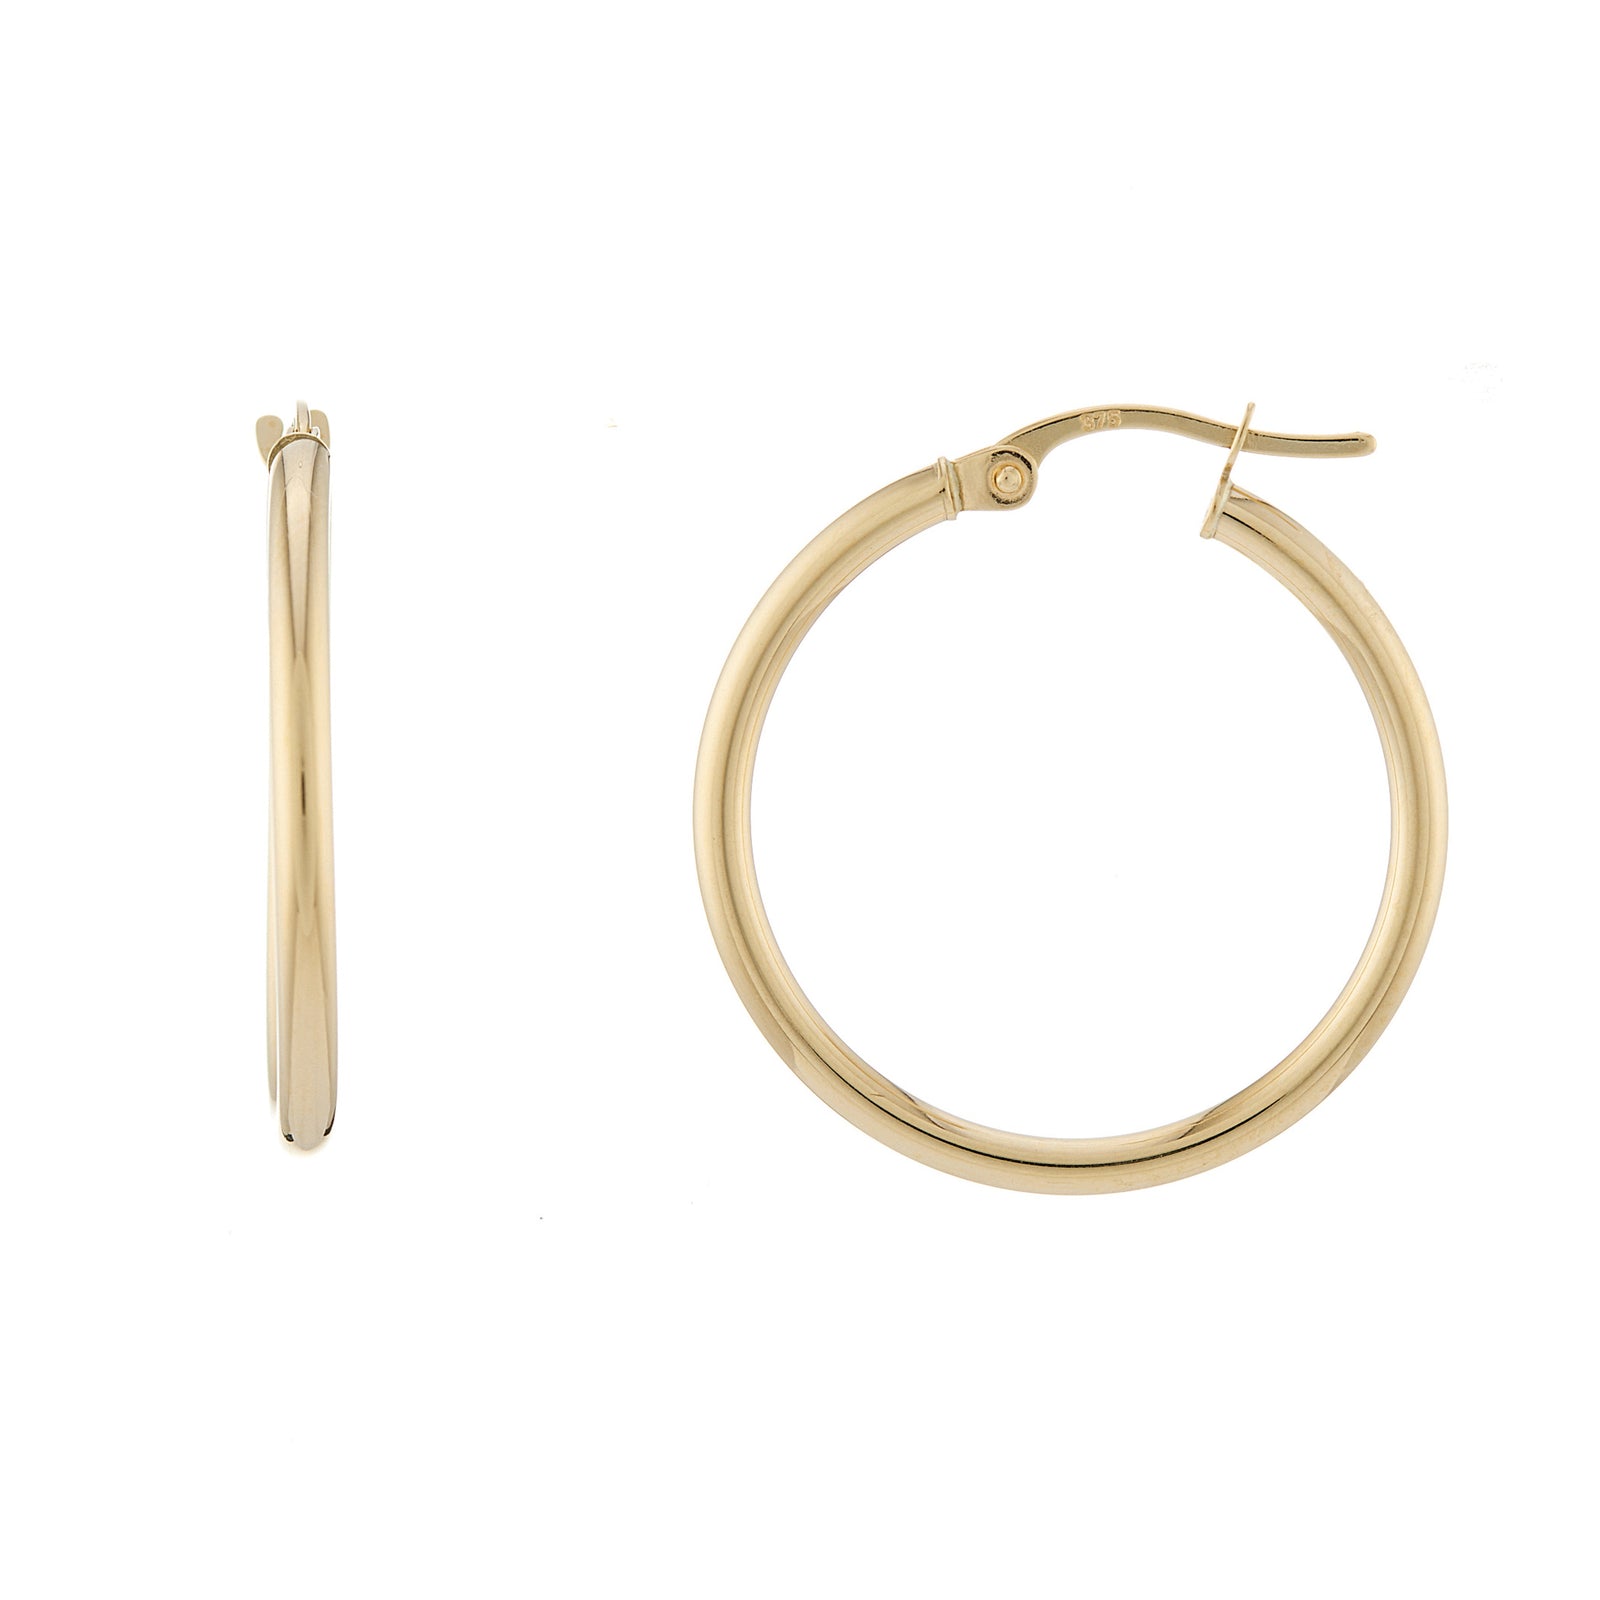 9ct gold plain 2mm x 20mm hoop earrings